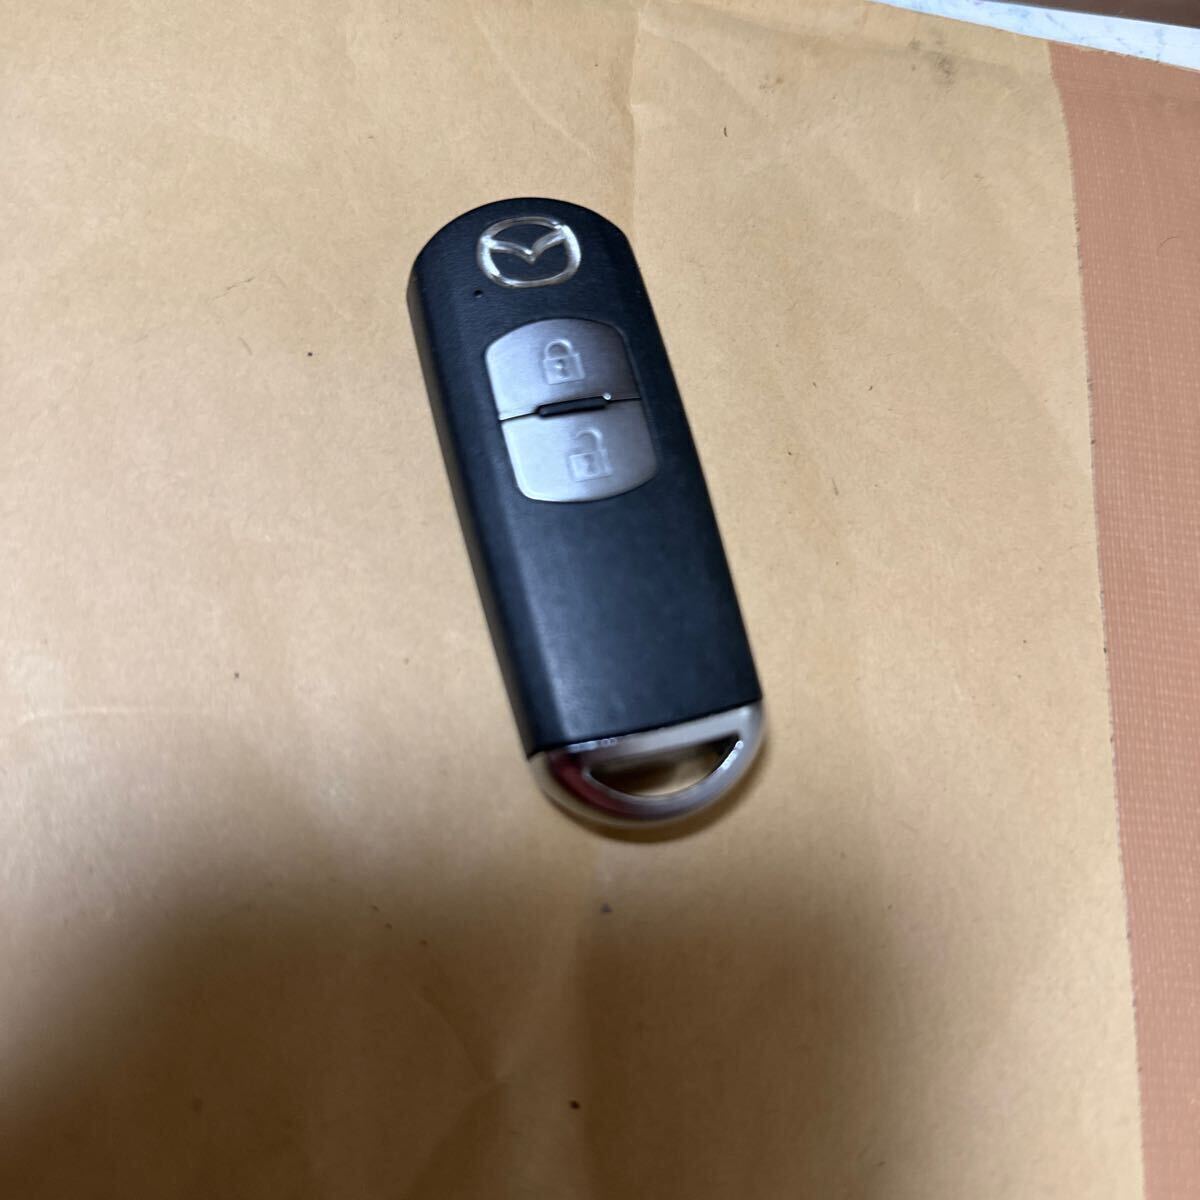 Mazda Genuine Smart Key Cx-5 Atenza Axela Cx Series Demio Etc. 2 Buttons